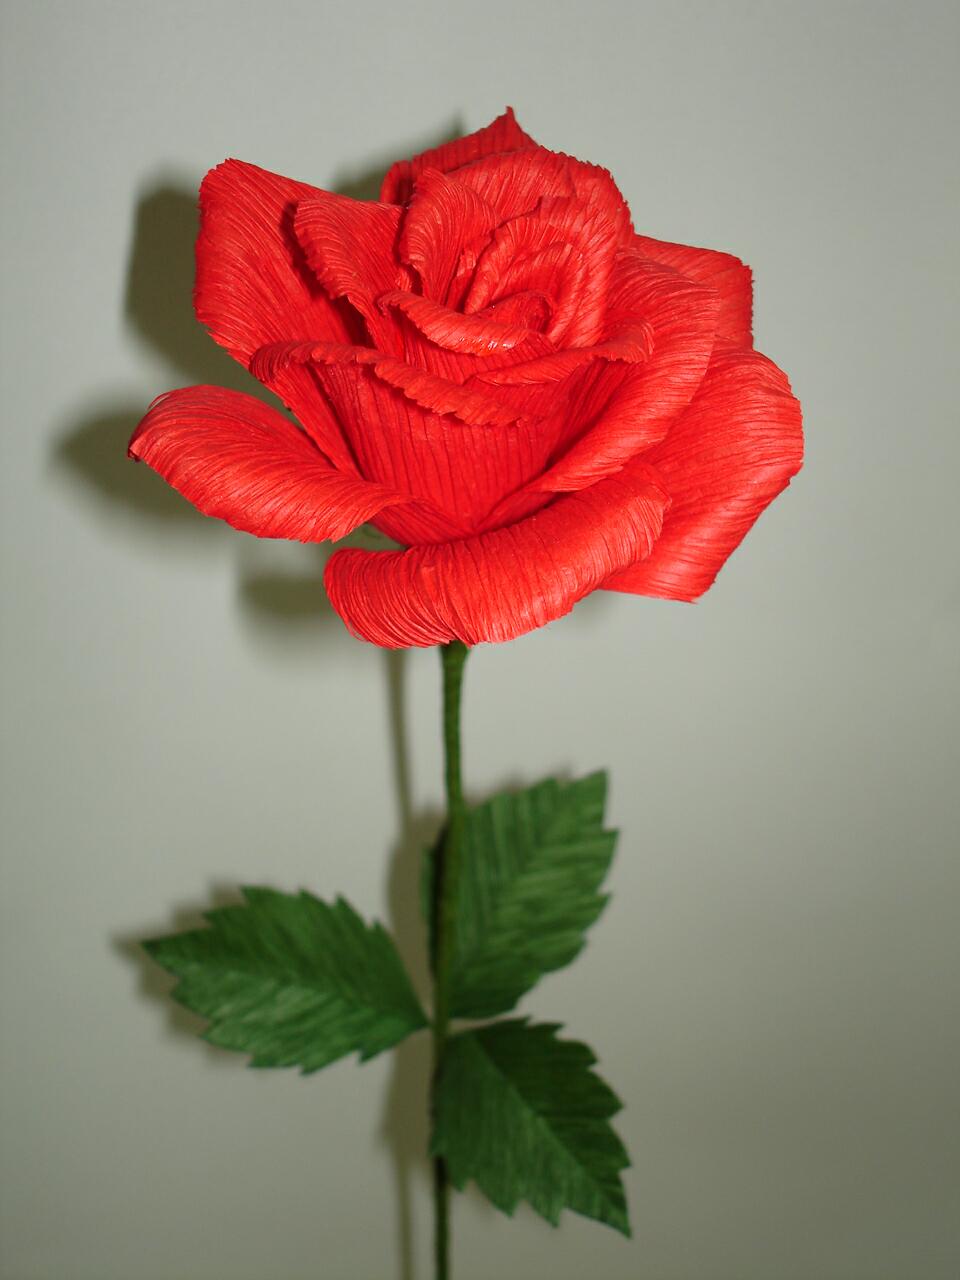 http://www.twinkleflowers.com/redrose1.jpg